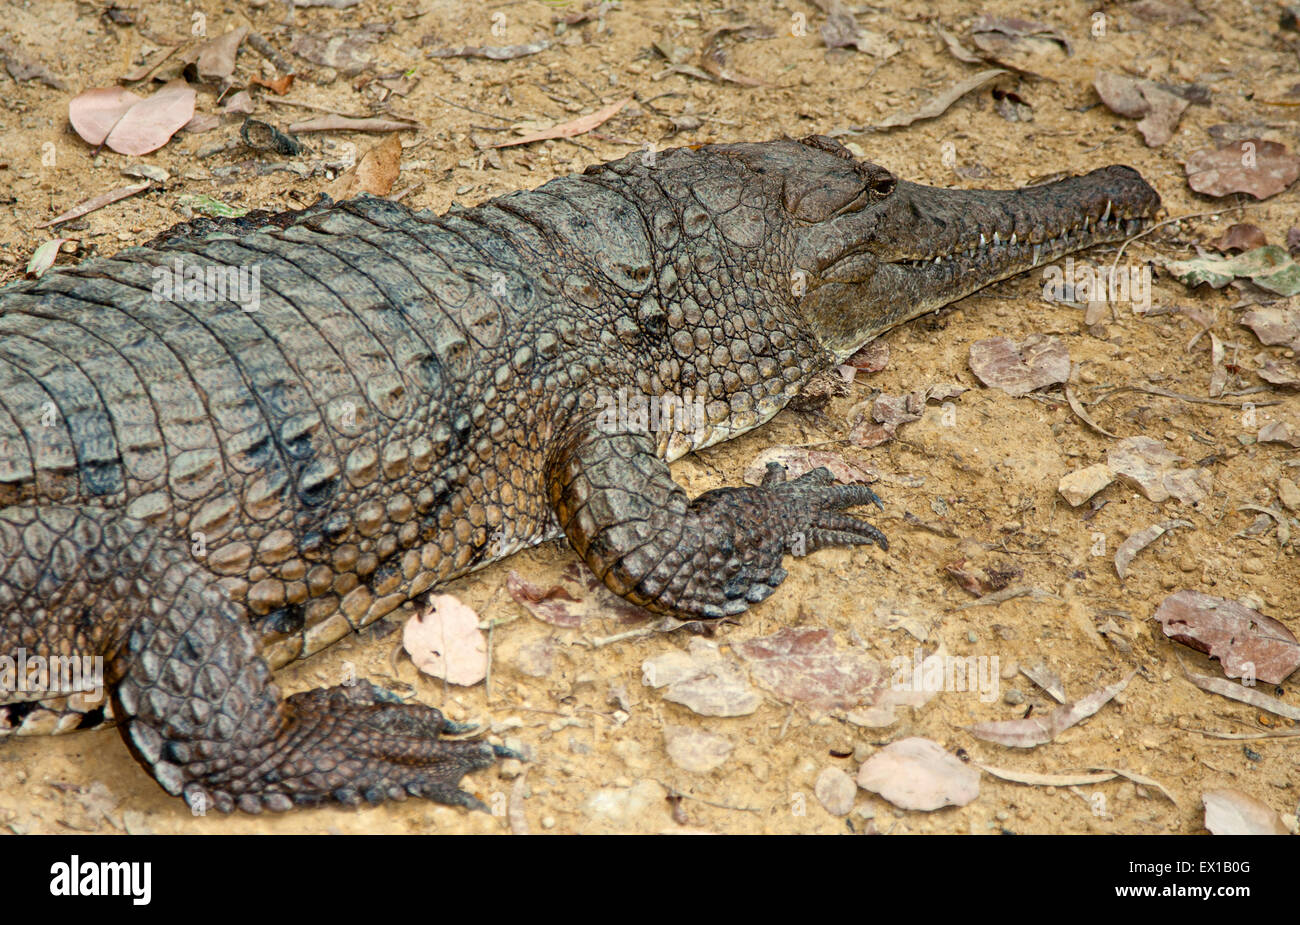 one fresh water crocodile basking in the sun Stock Photo